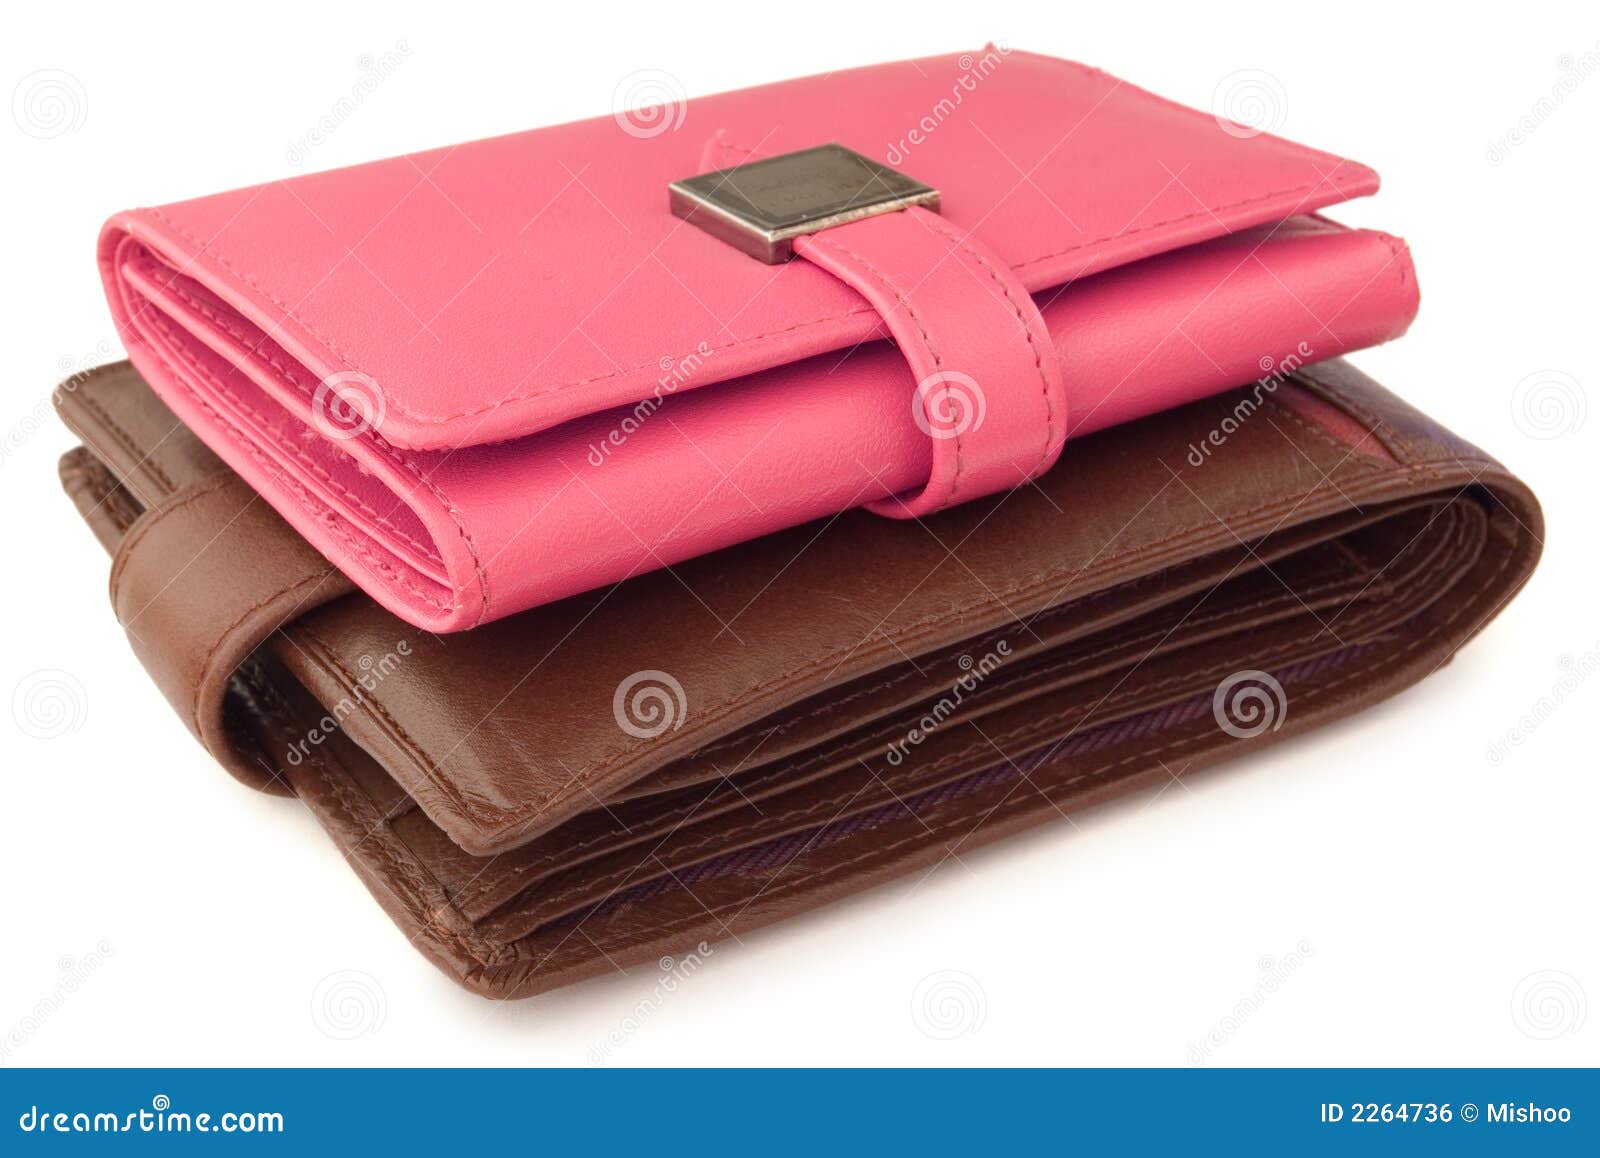 Buy HIGHFI Women Pink Handbag Peach Online @ Best Price in India | Flipkart .com